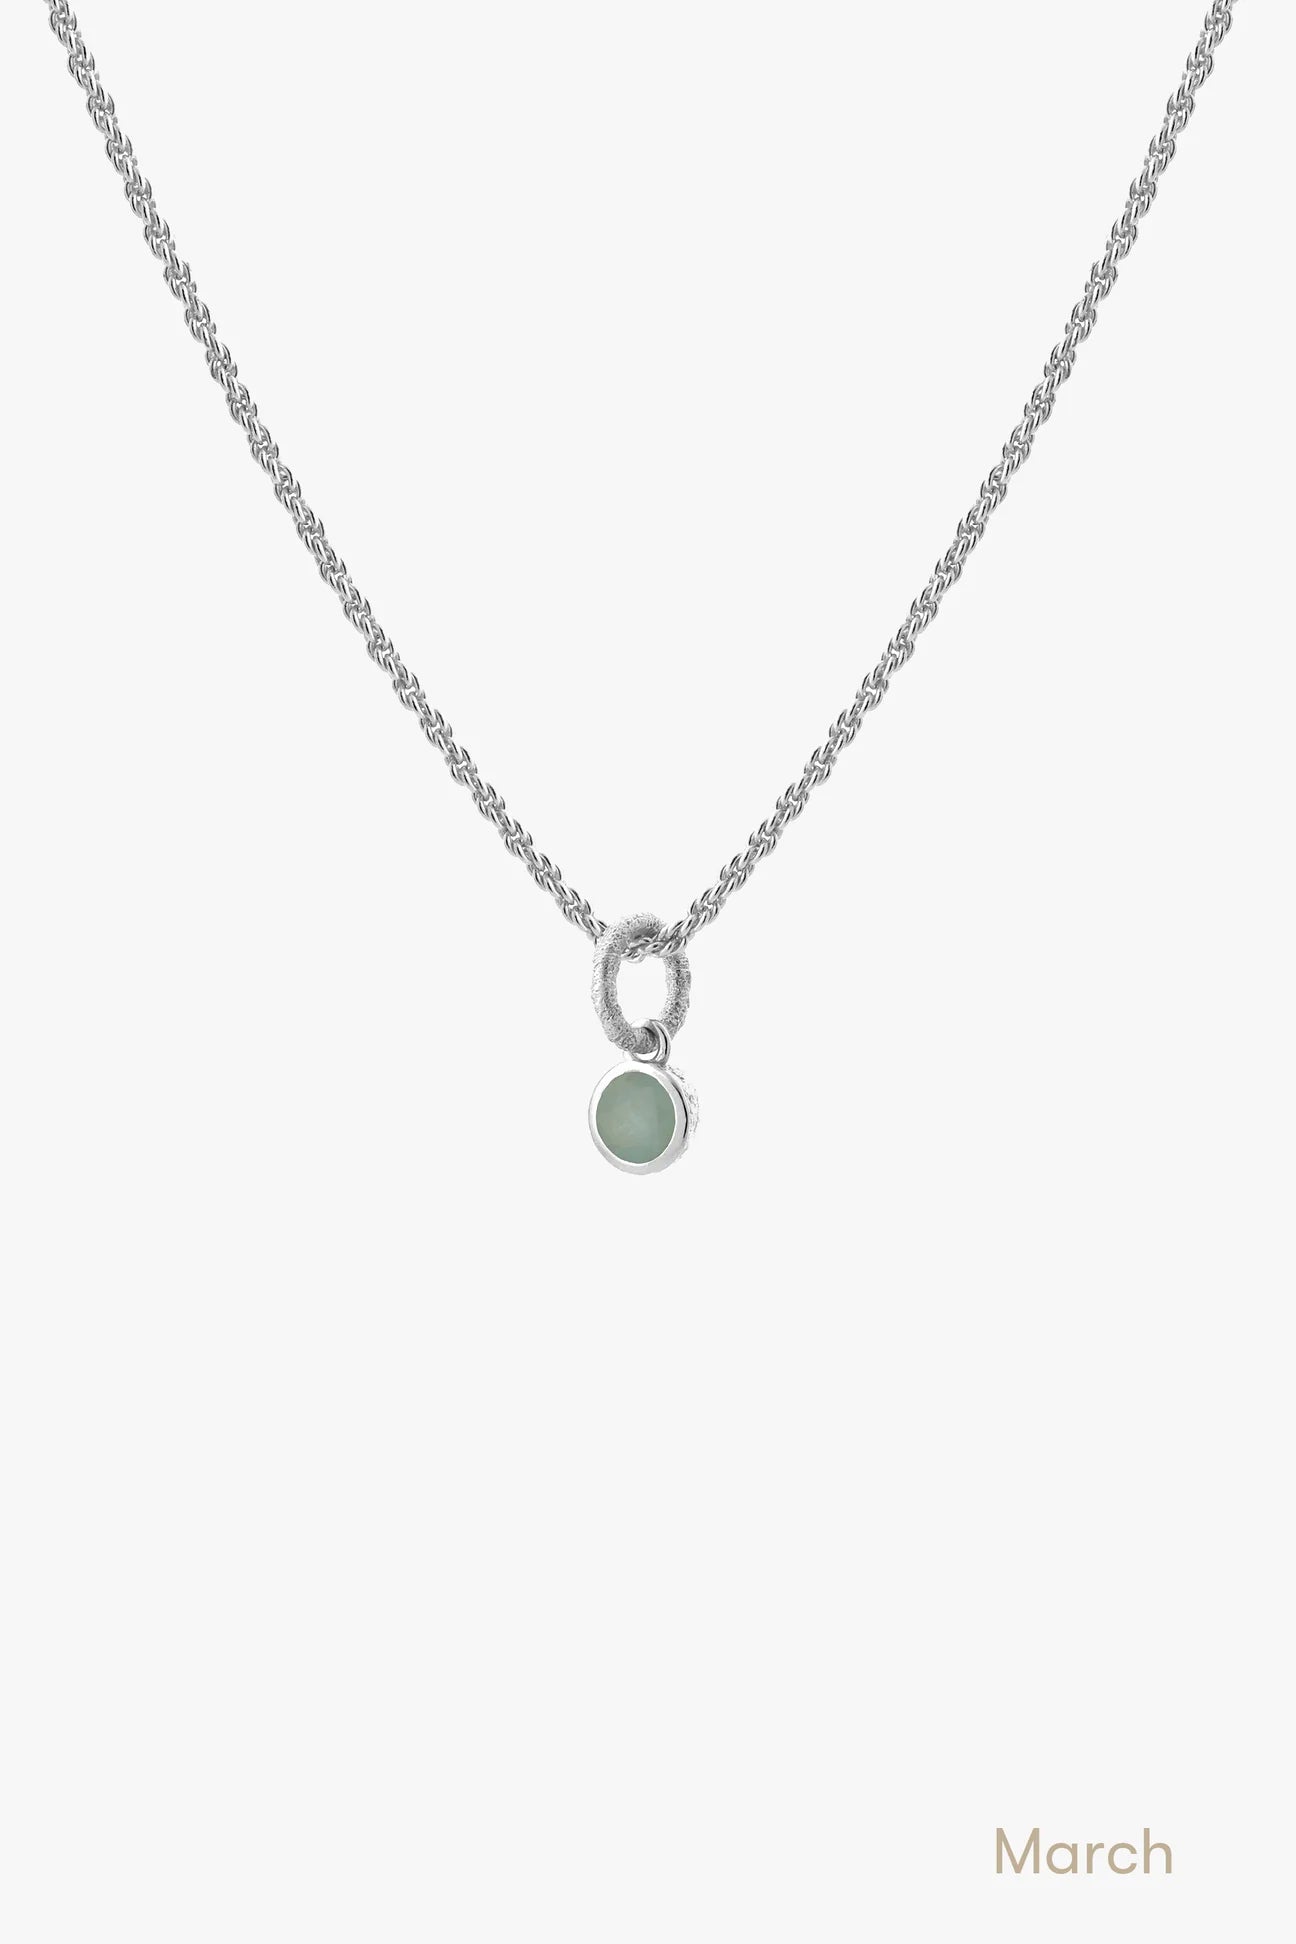 Aquamarine Birthstone Necklace Silver